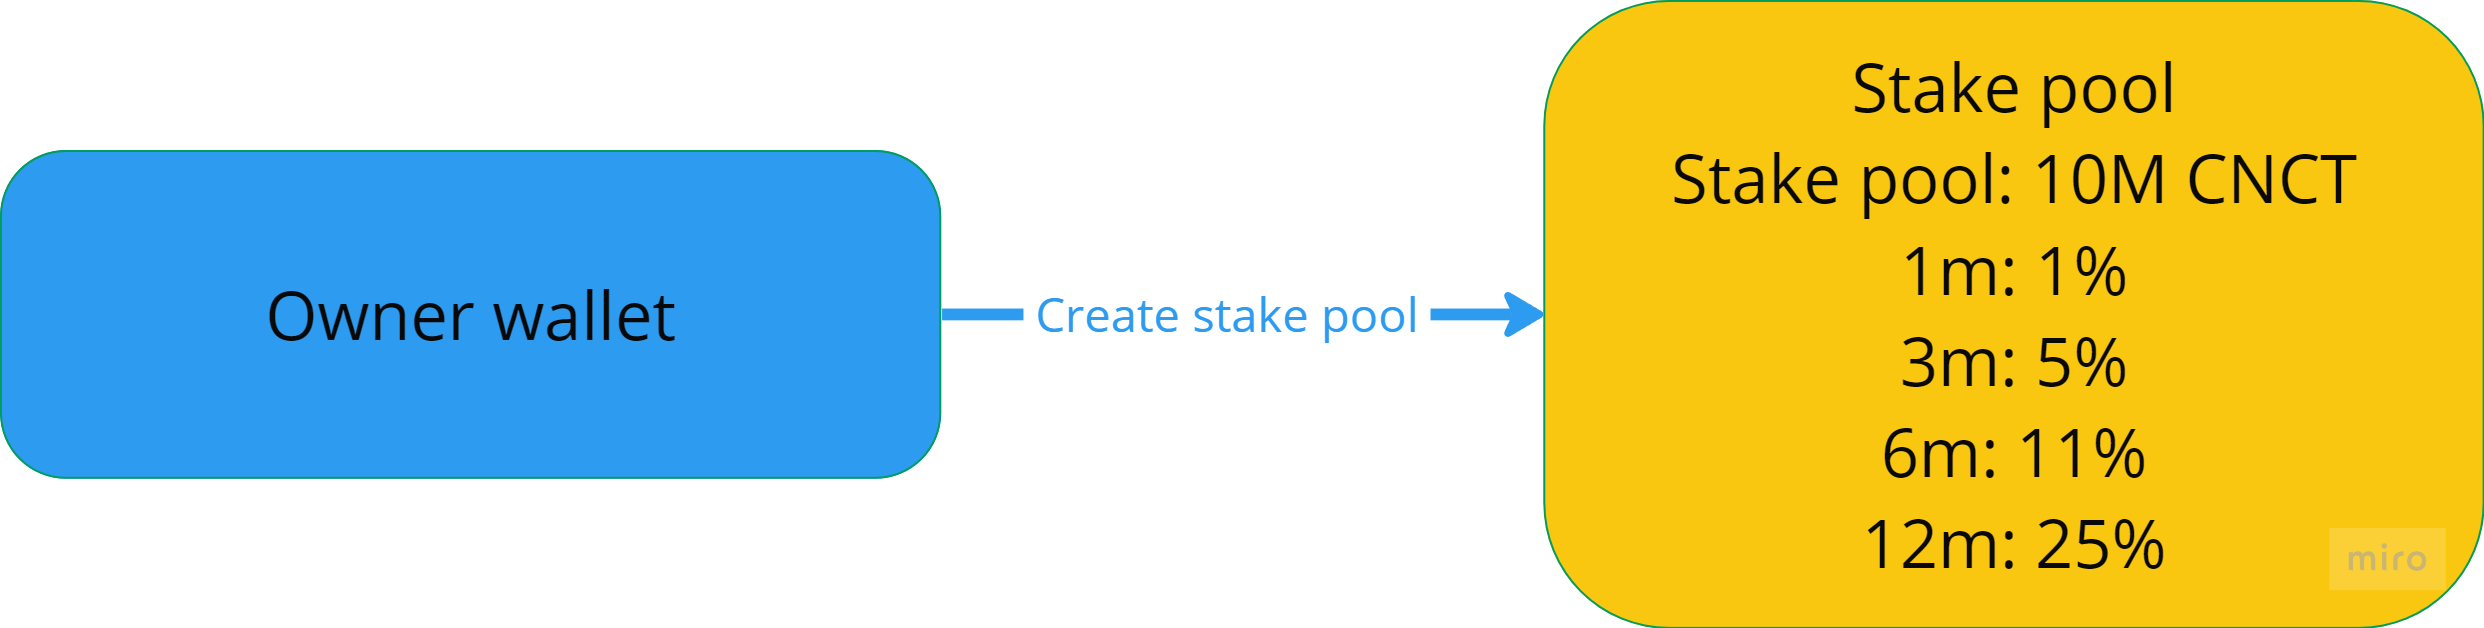 Create stake pool